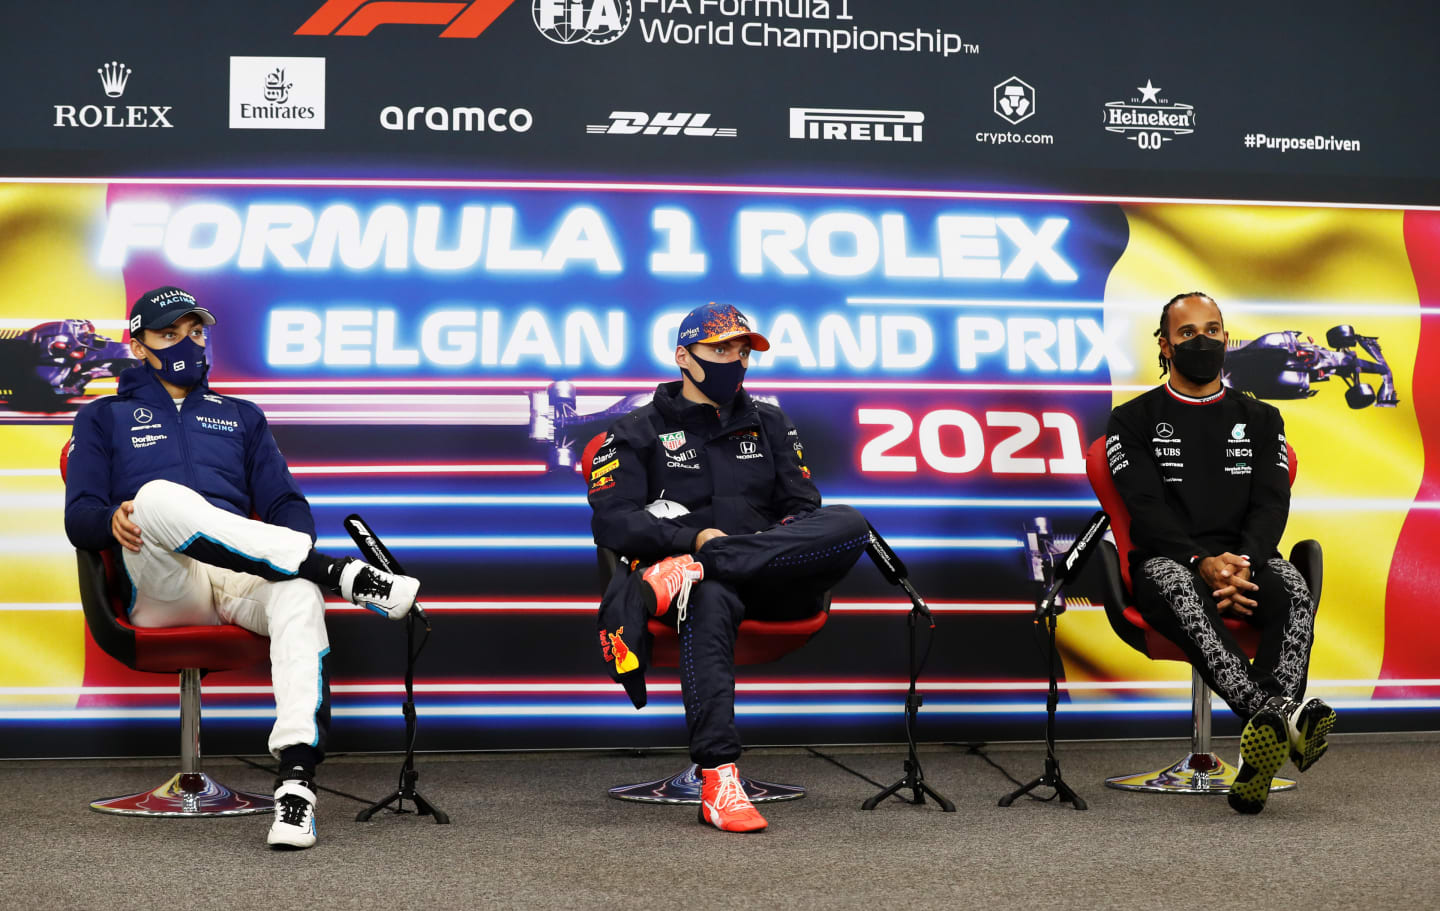 SPA, BELGIUM - AUGUST 29: Race winner Max Verstappen of Netherlands and Red Bull Racing, second